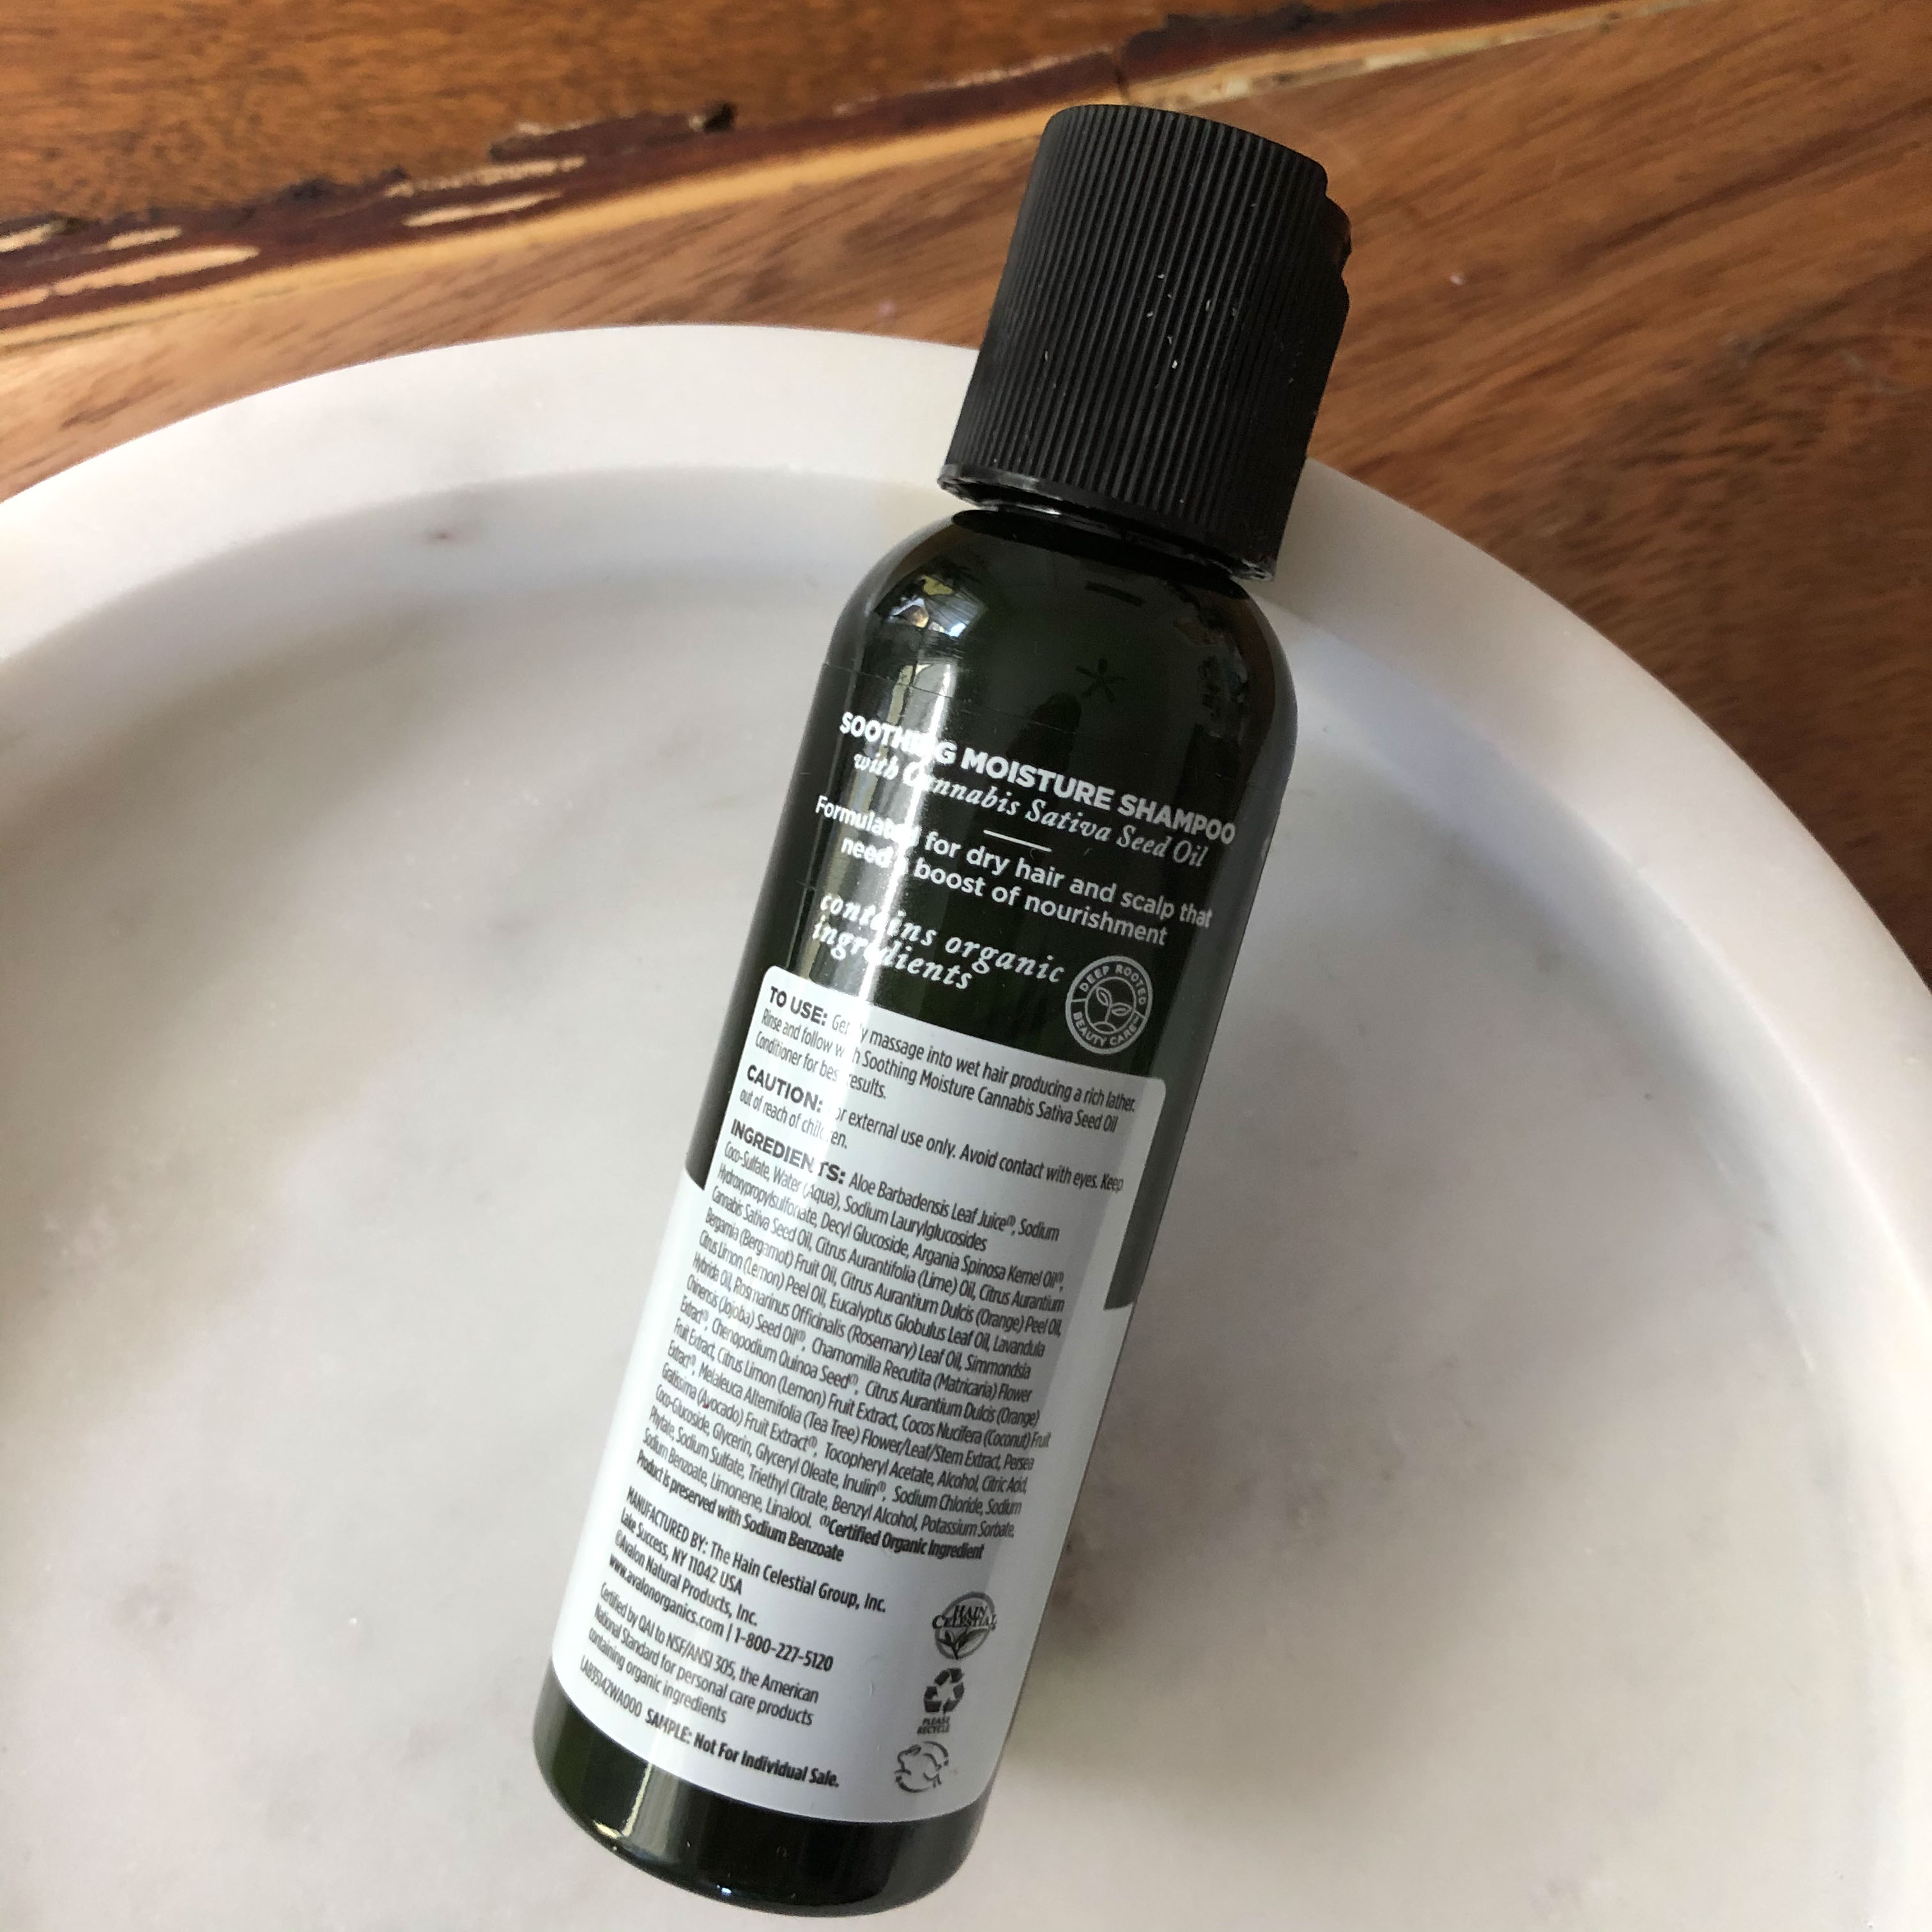 Sun Organic Recalls Wintergreen Essential Oils Due to Failure to